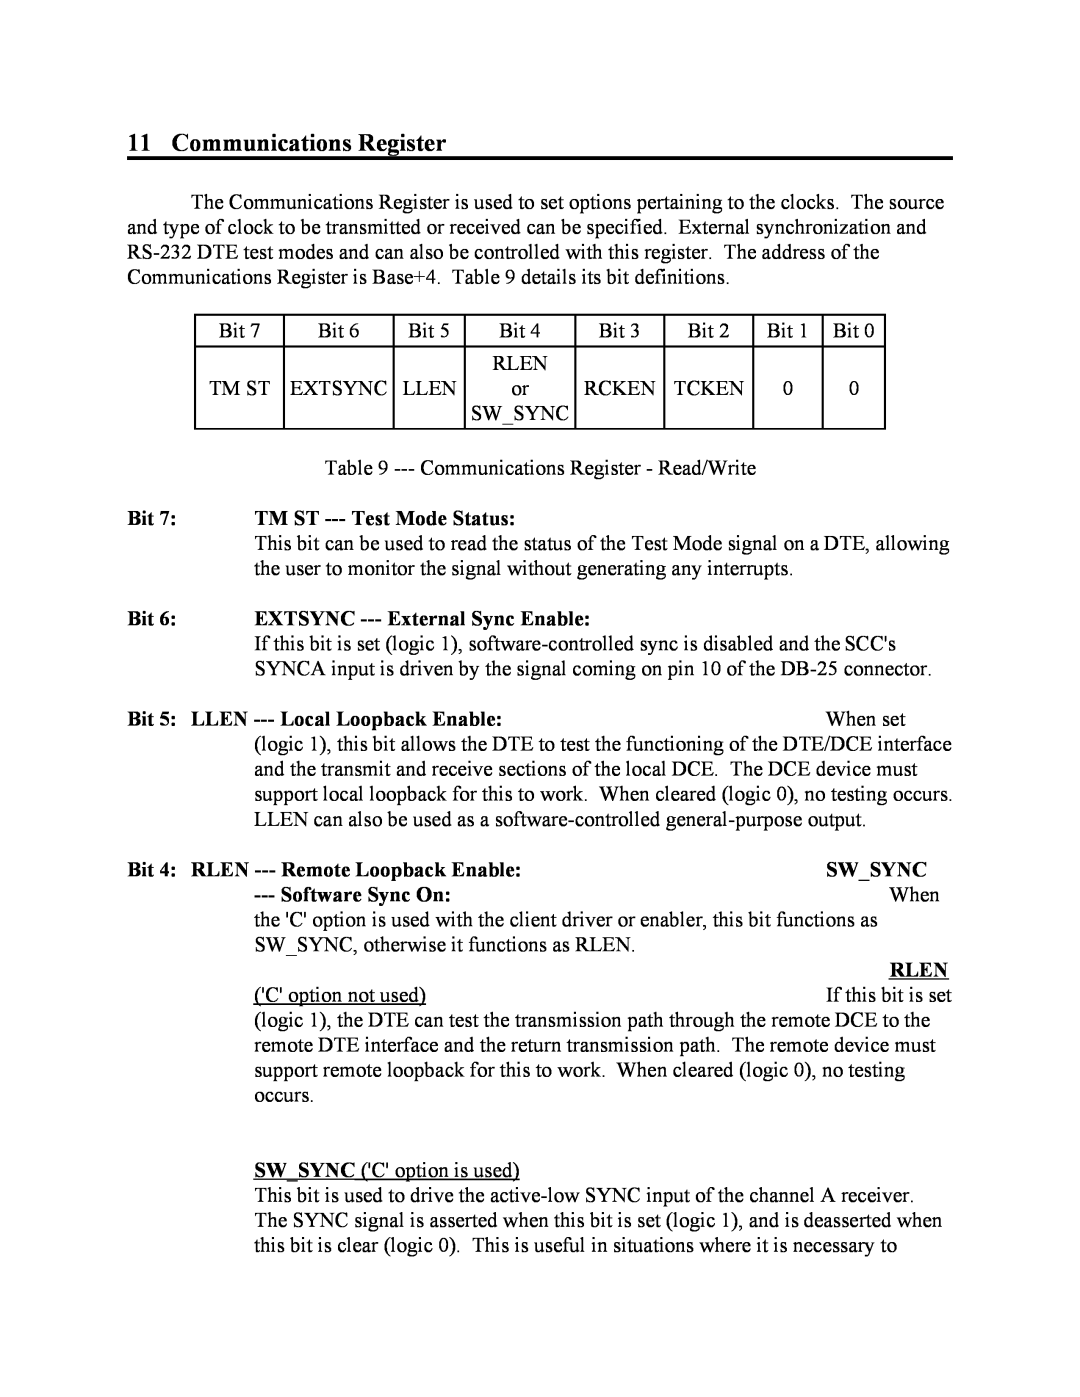 Quatech MPAP-100 user manual Communications Register, Swsync 